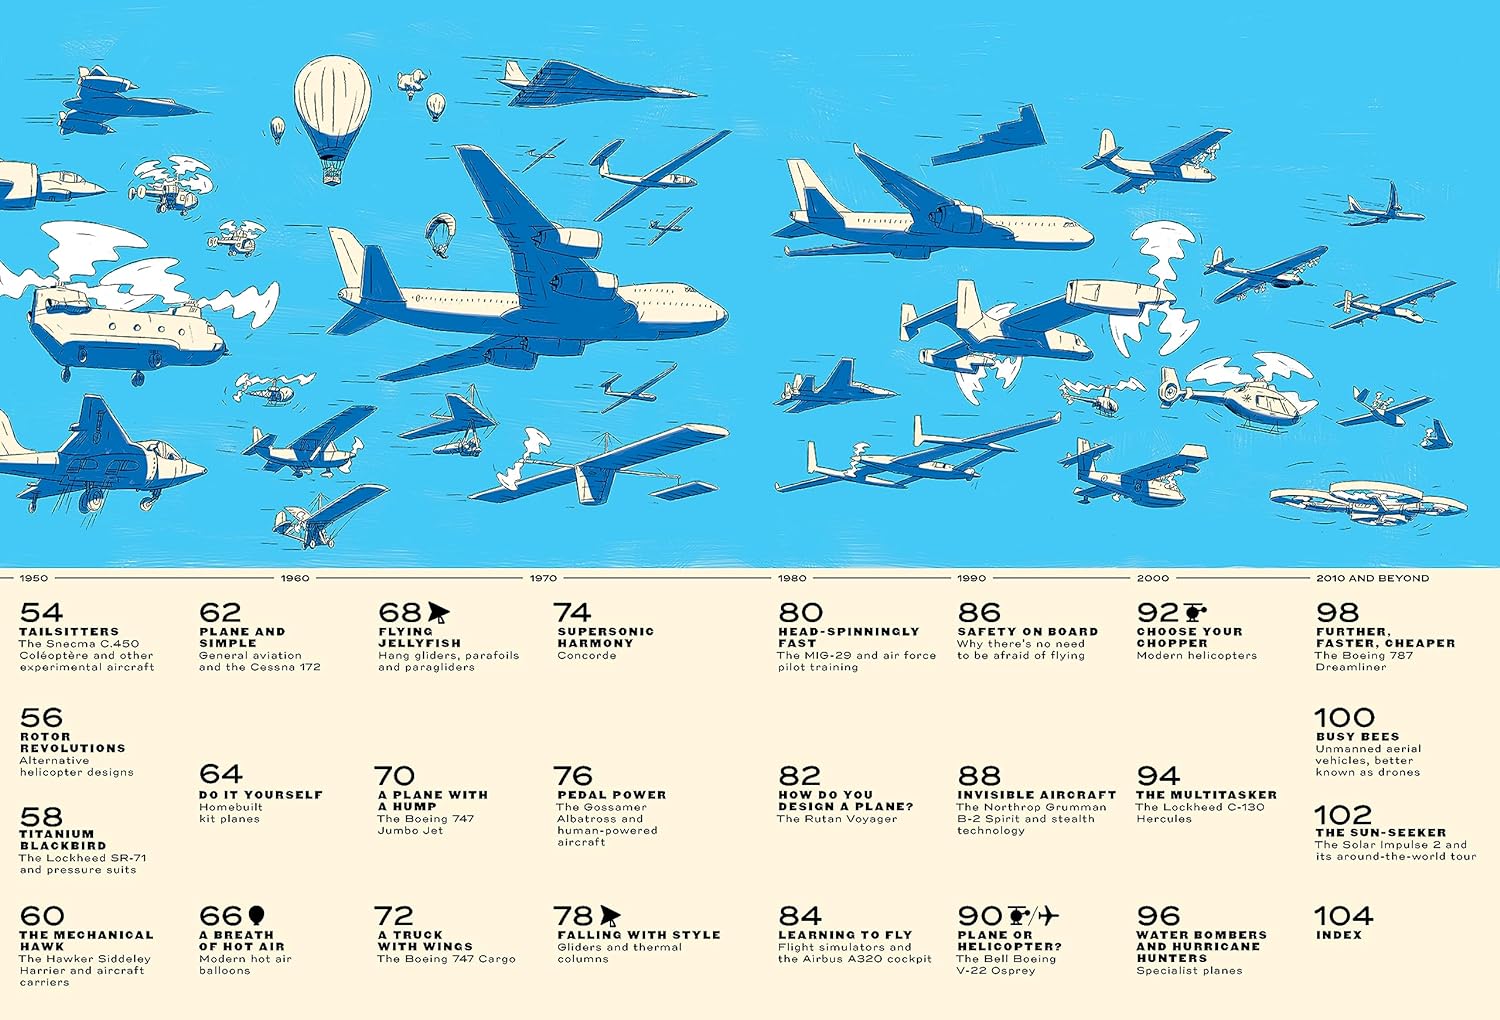 Sky High!: A Soaring History Of Aviation